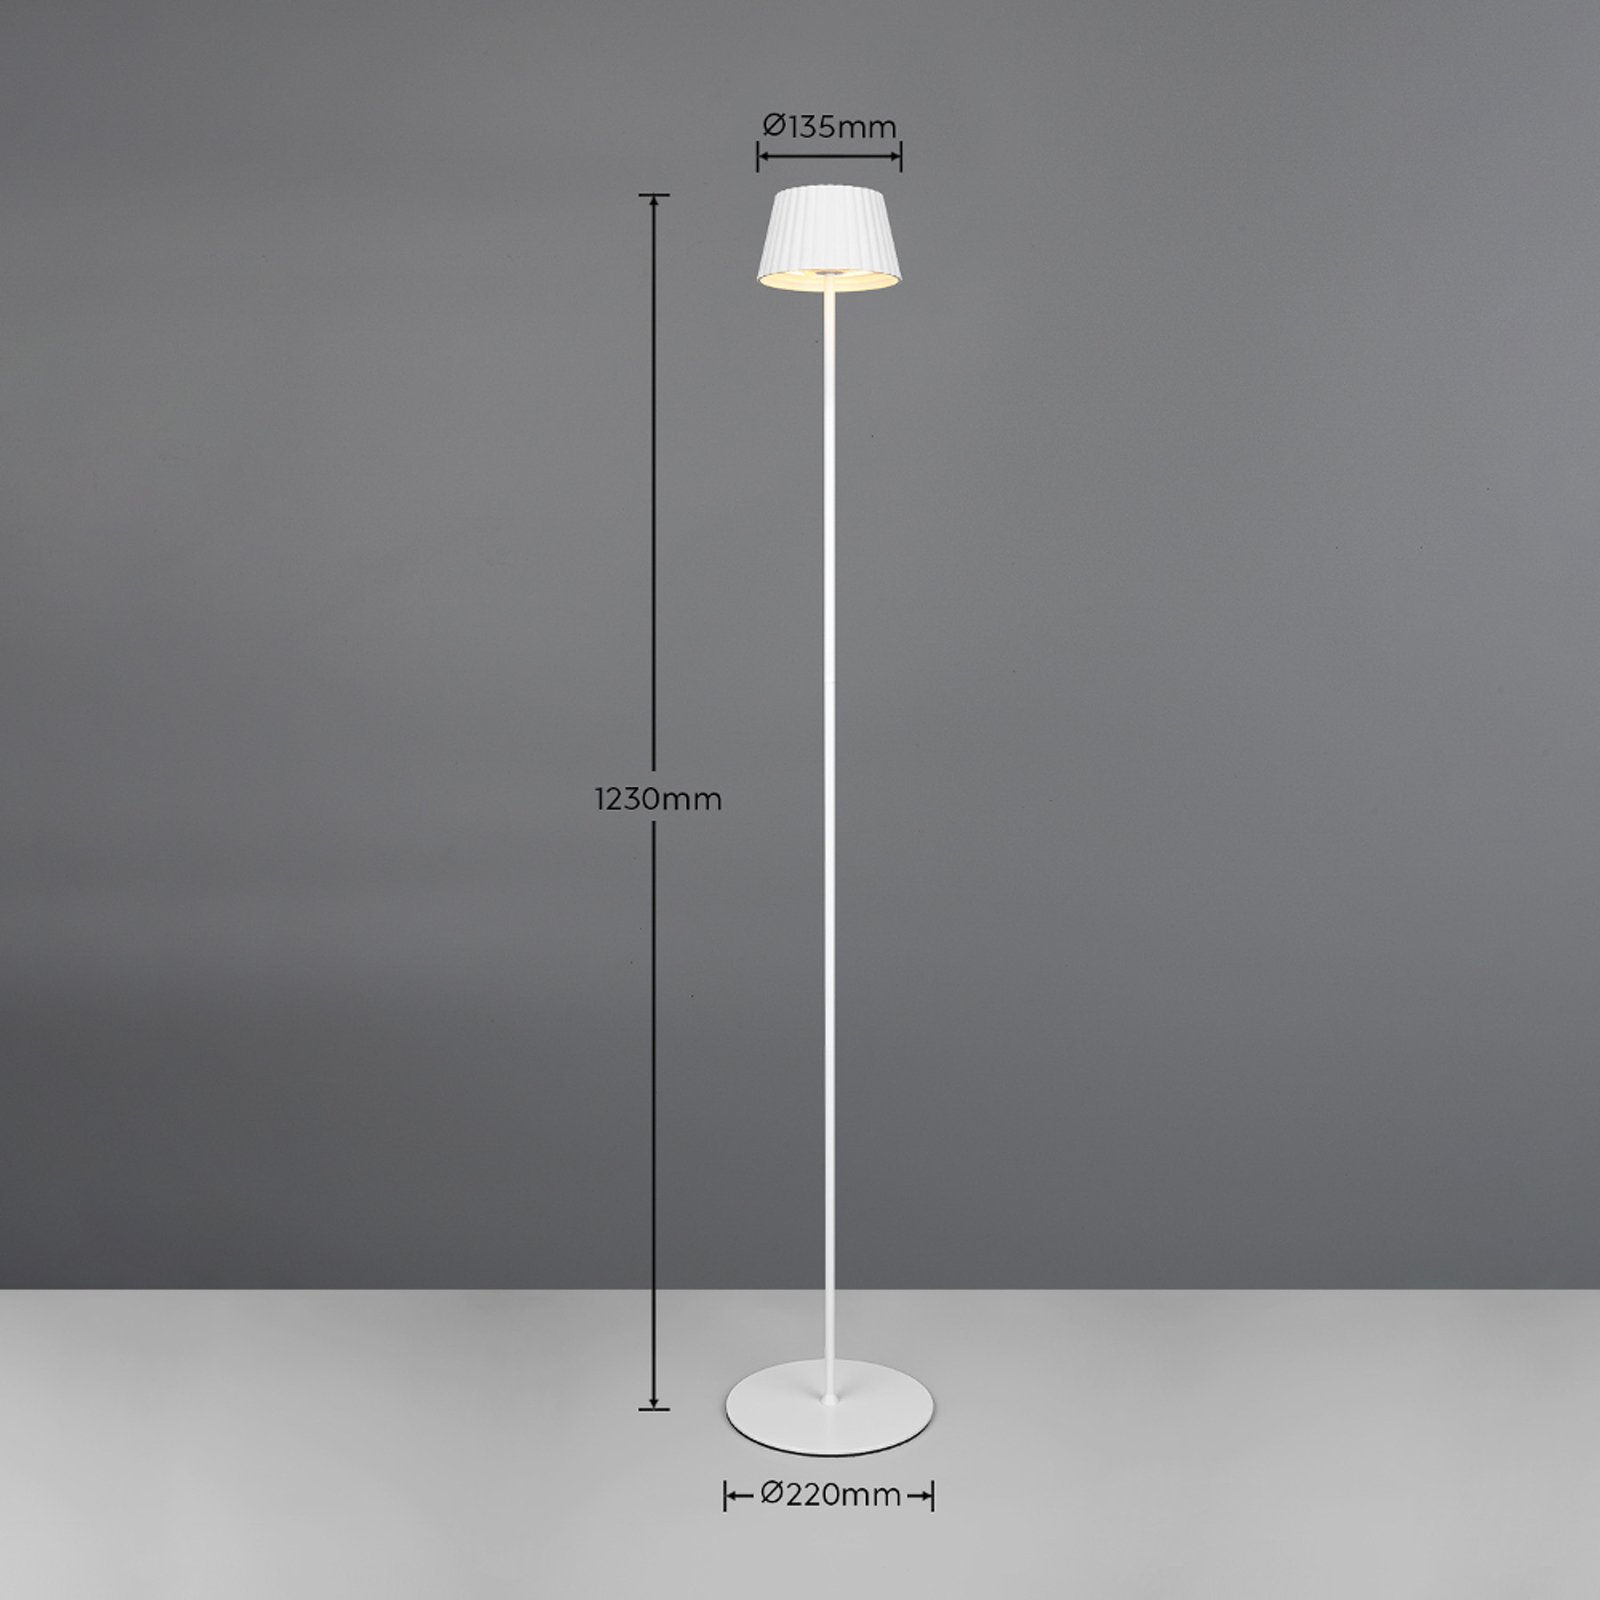 Suarez LED talna svetilka za polnjenje, bela, višina 123 cm, kovinska